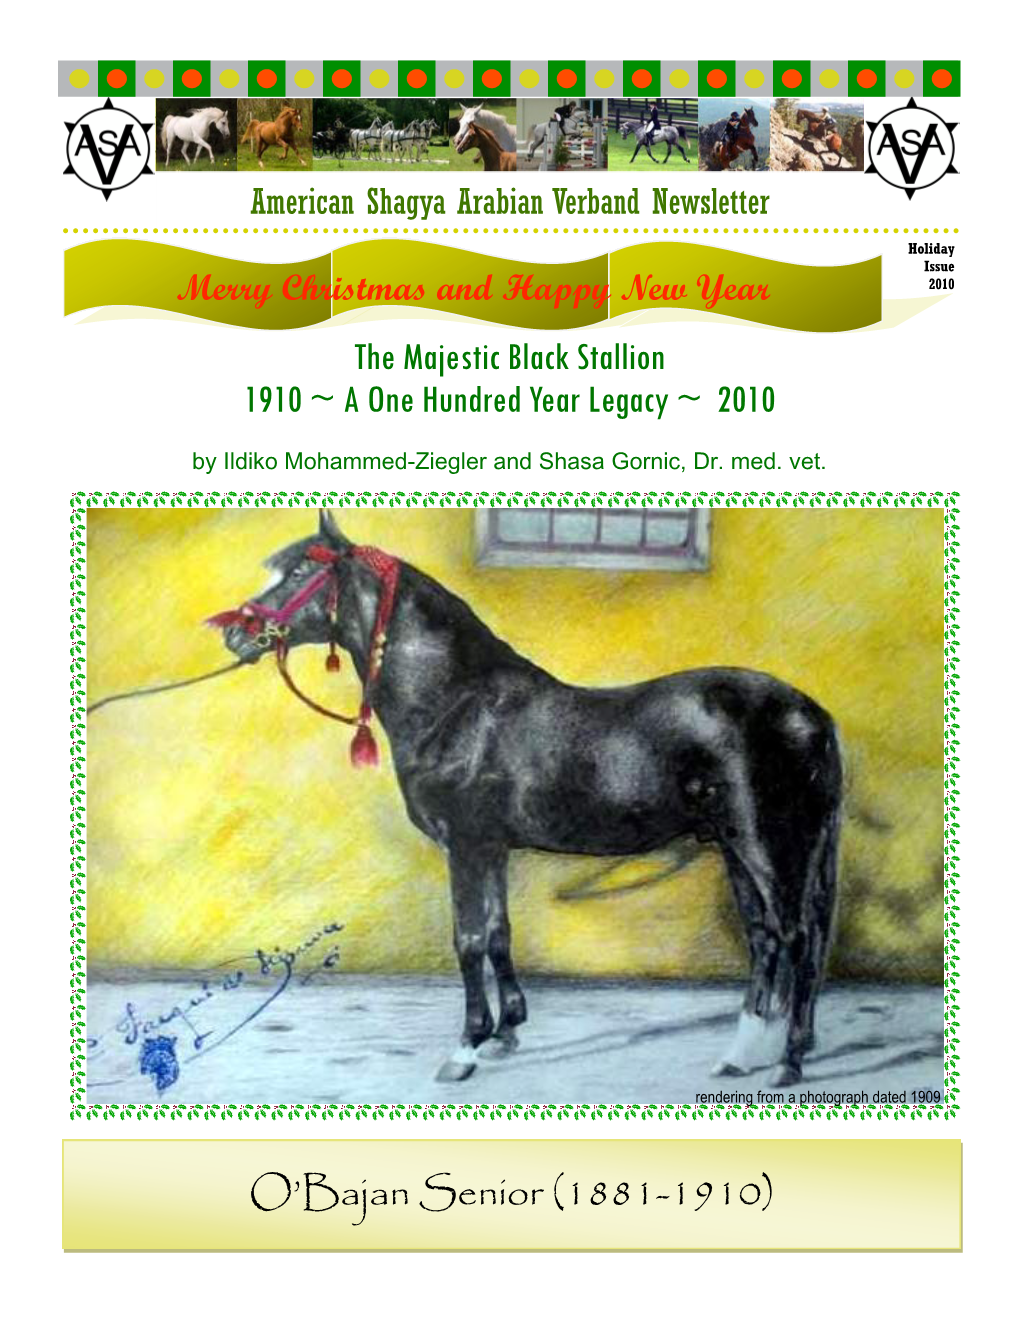 O'bajan Senior (1881-1910) the Majestic Black Stallion 1910 ~ A